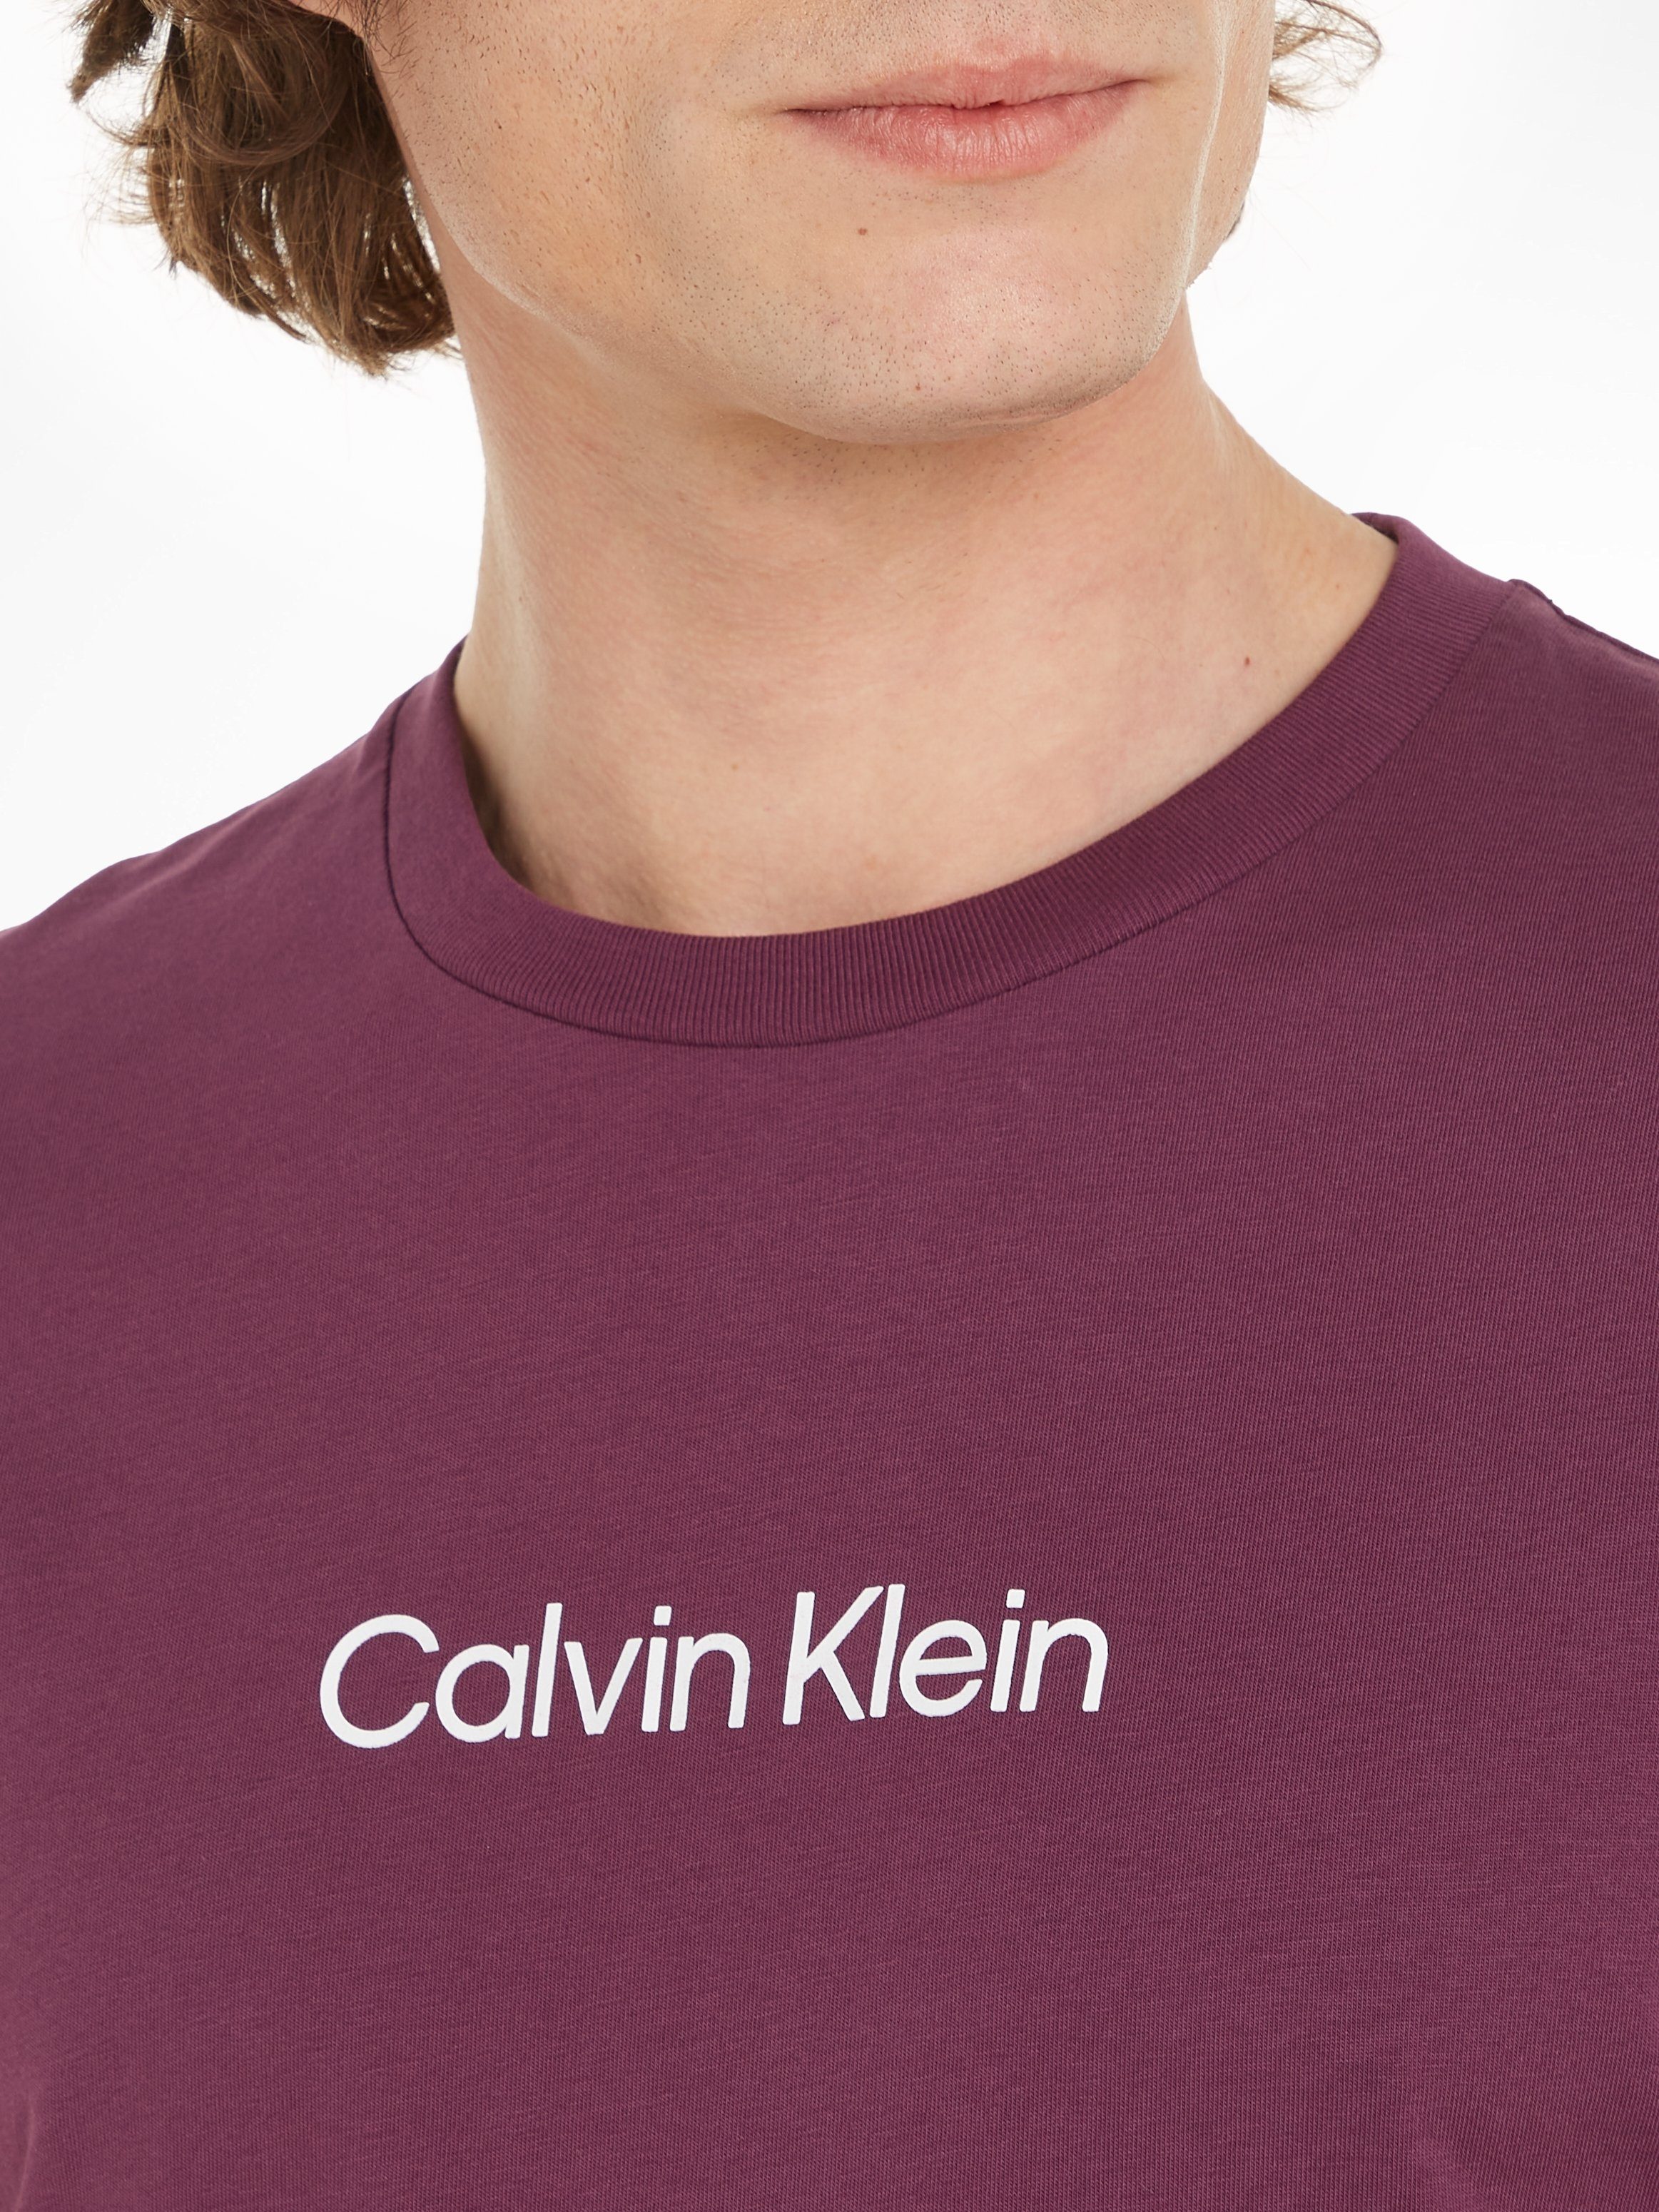 Calvin Klein T-Shirt LOGO Markenlabel Italian mit T-SHIRT Plum HERO COMFORT aufgedrucktem